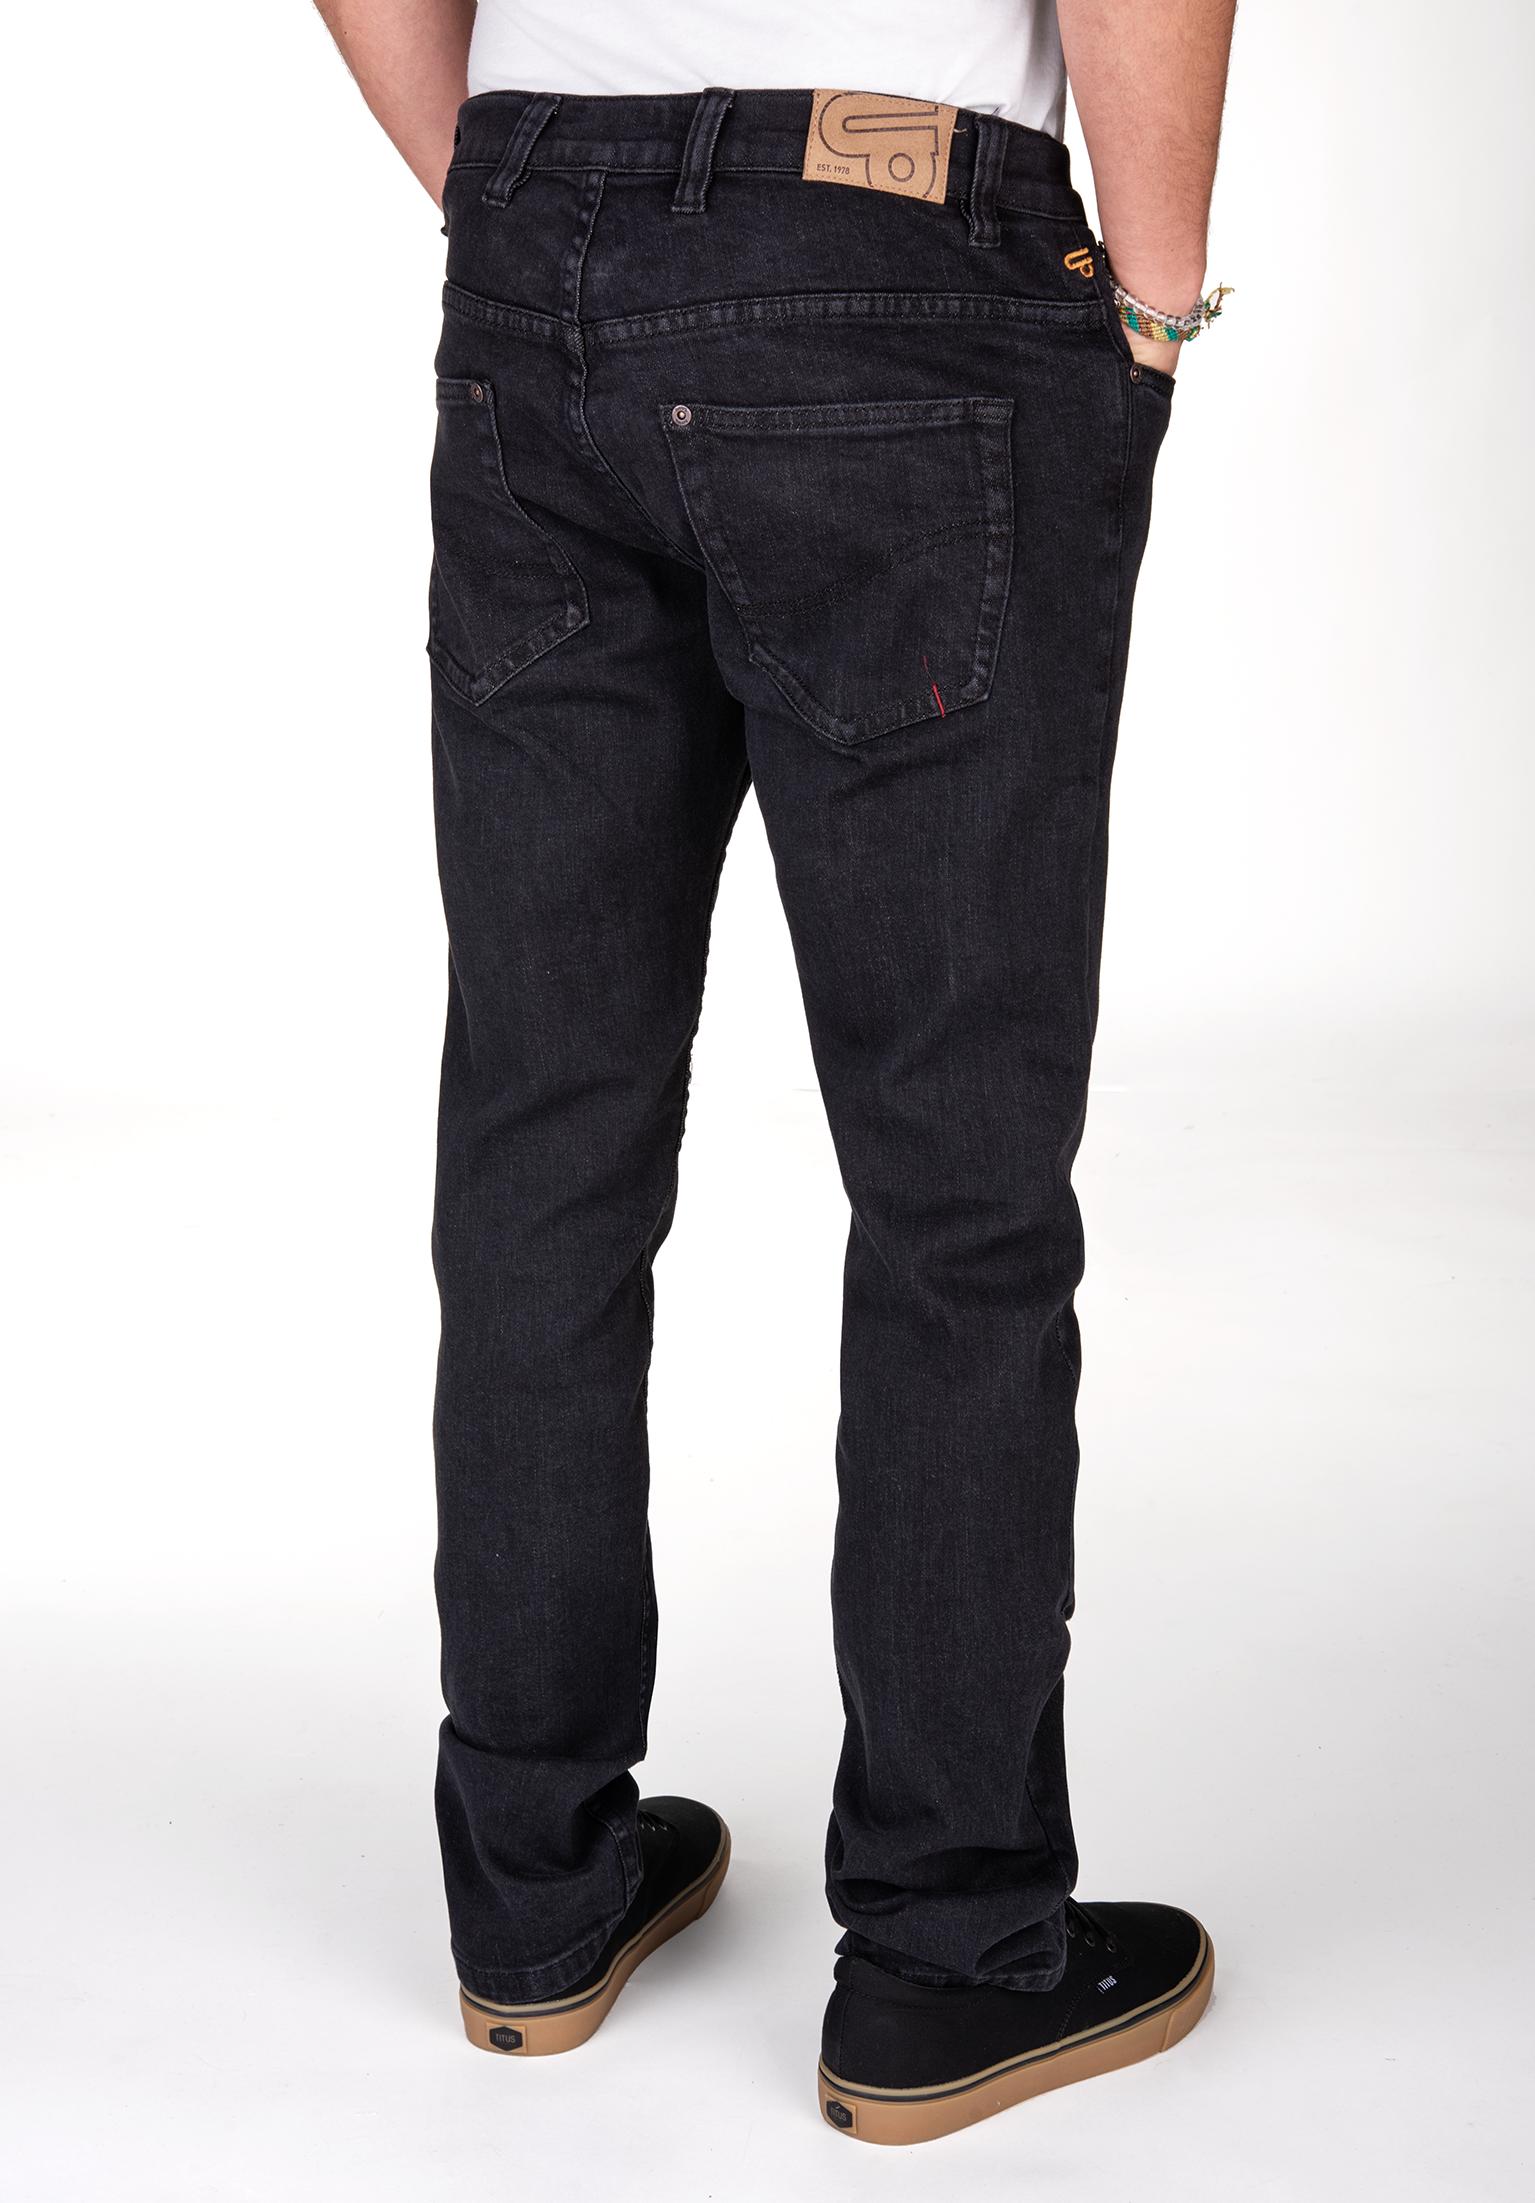 titus-jeans-taper-fit-black-vintage-rueckenansicht-0540982.jpg